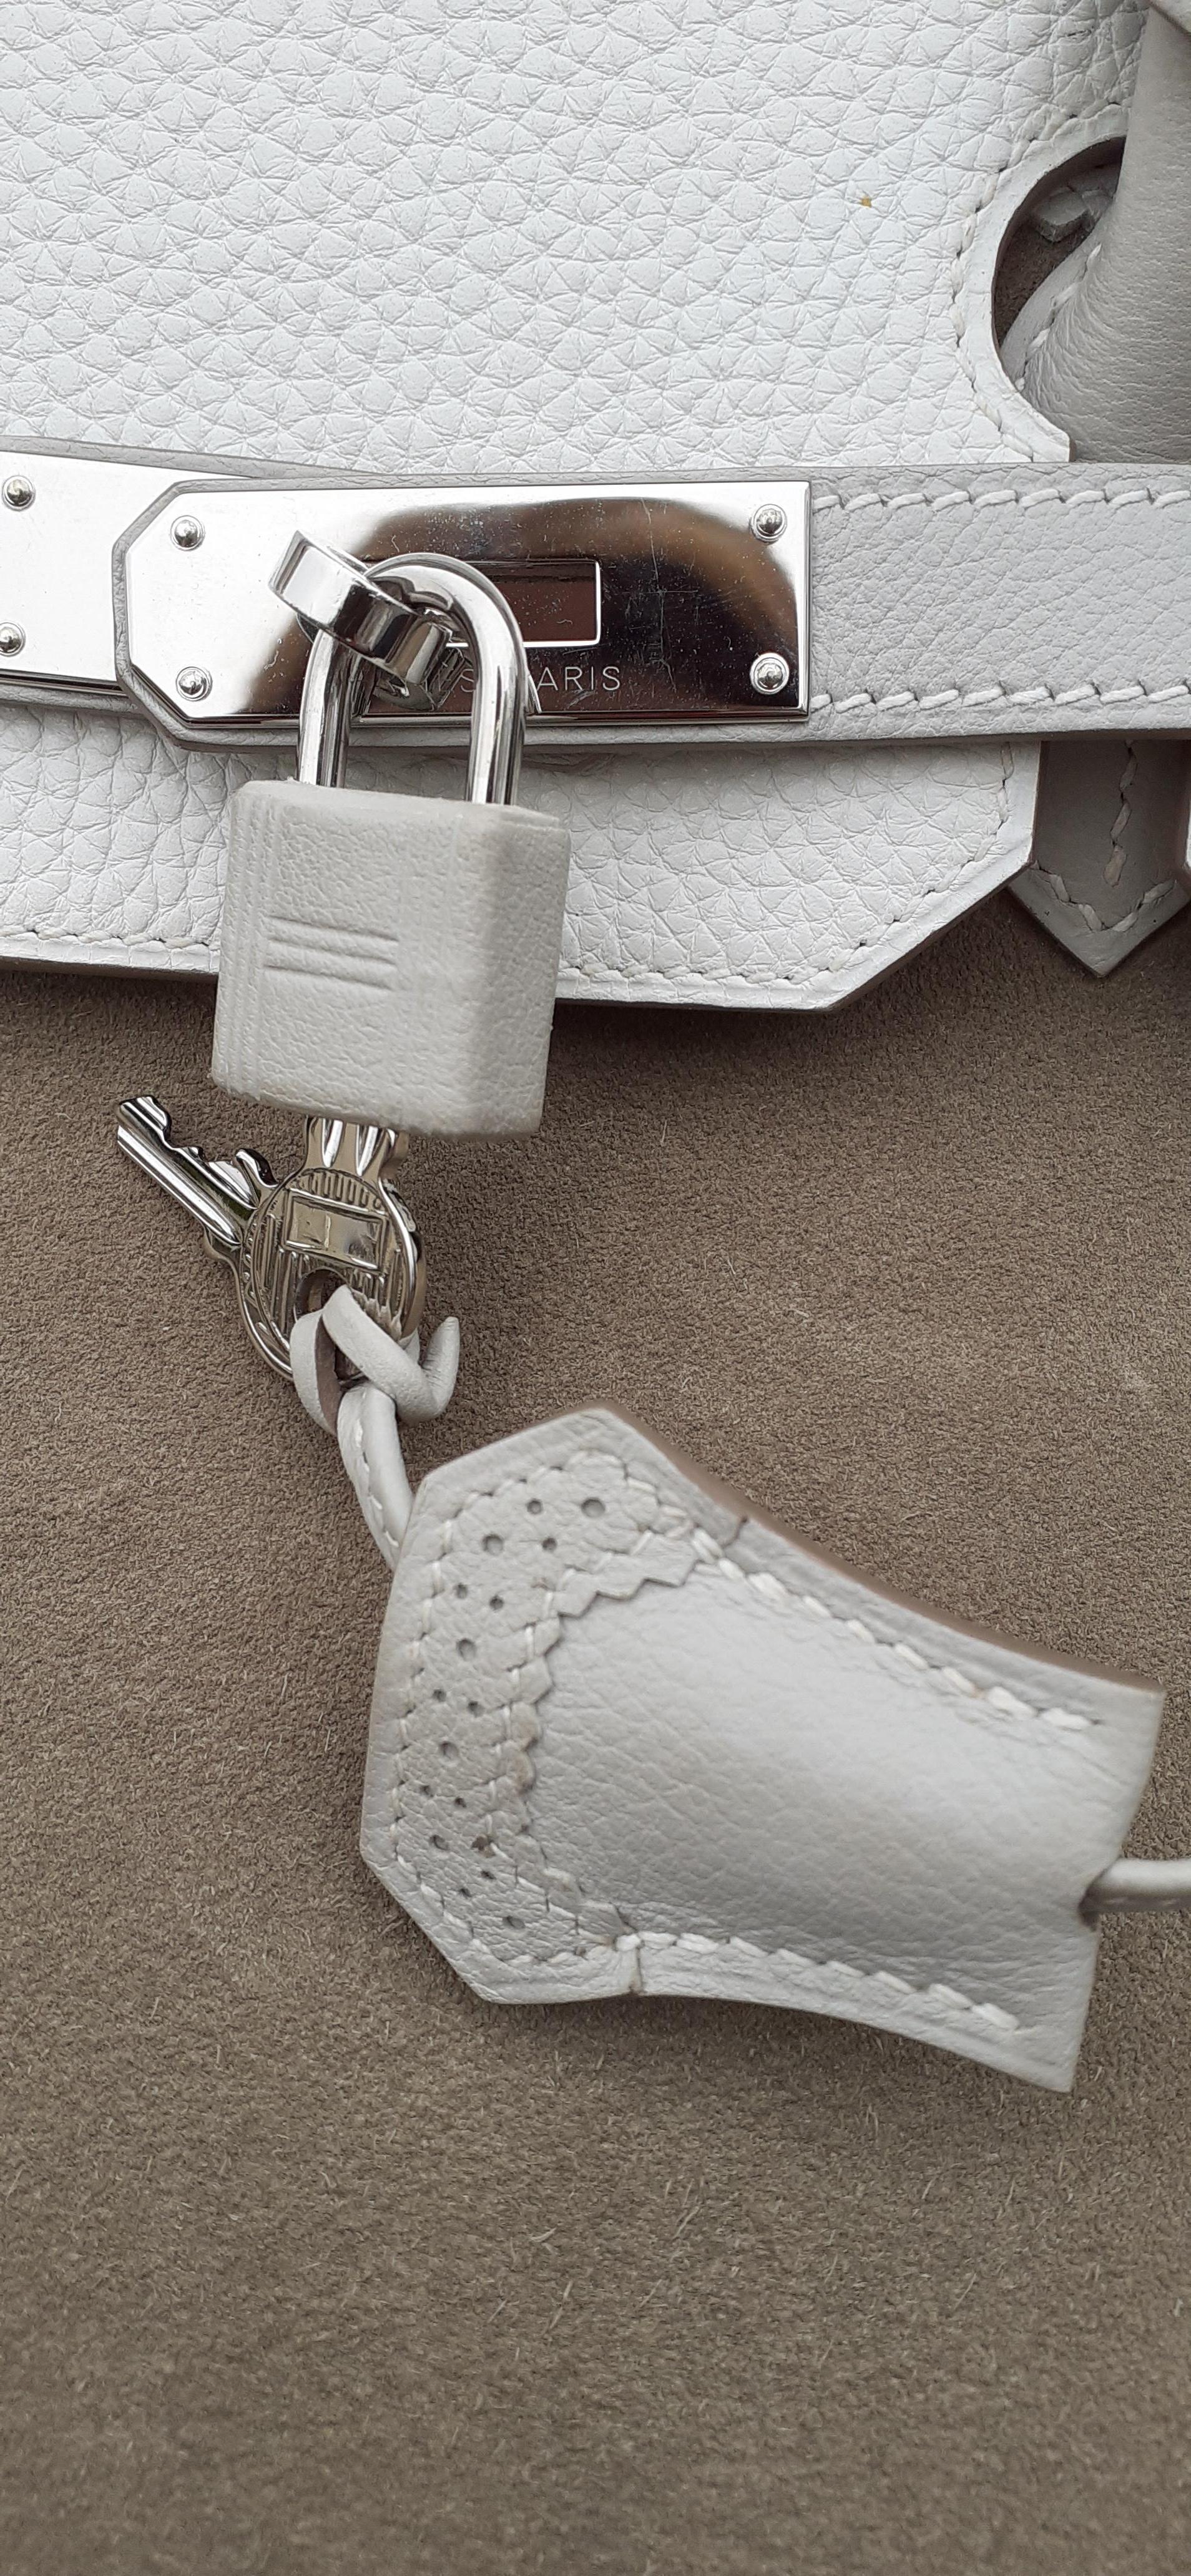 Hermès Birkin 35 Tasche Limited Edition Ghillies Grizzly Doblis Grau Weiß Caillou im Angebot 5